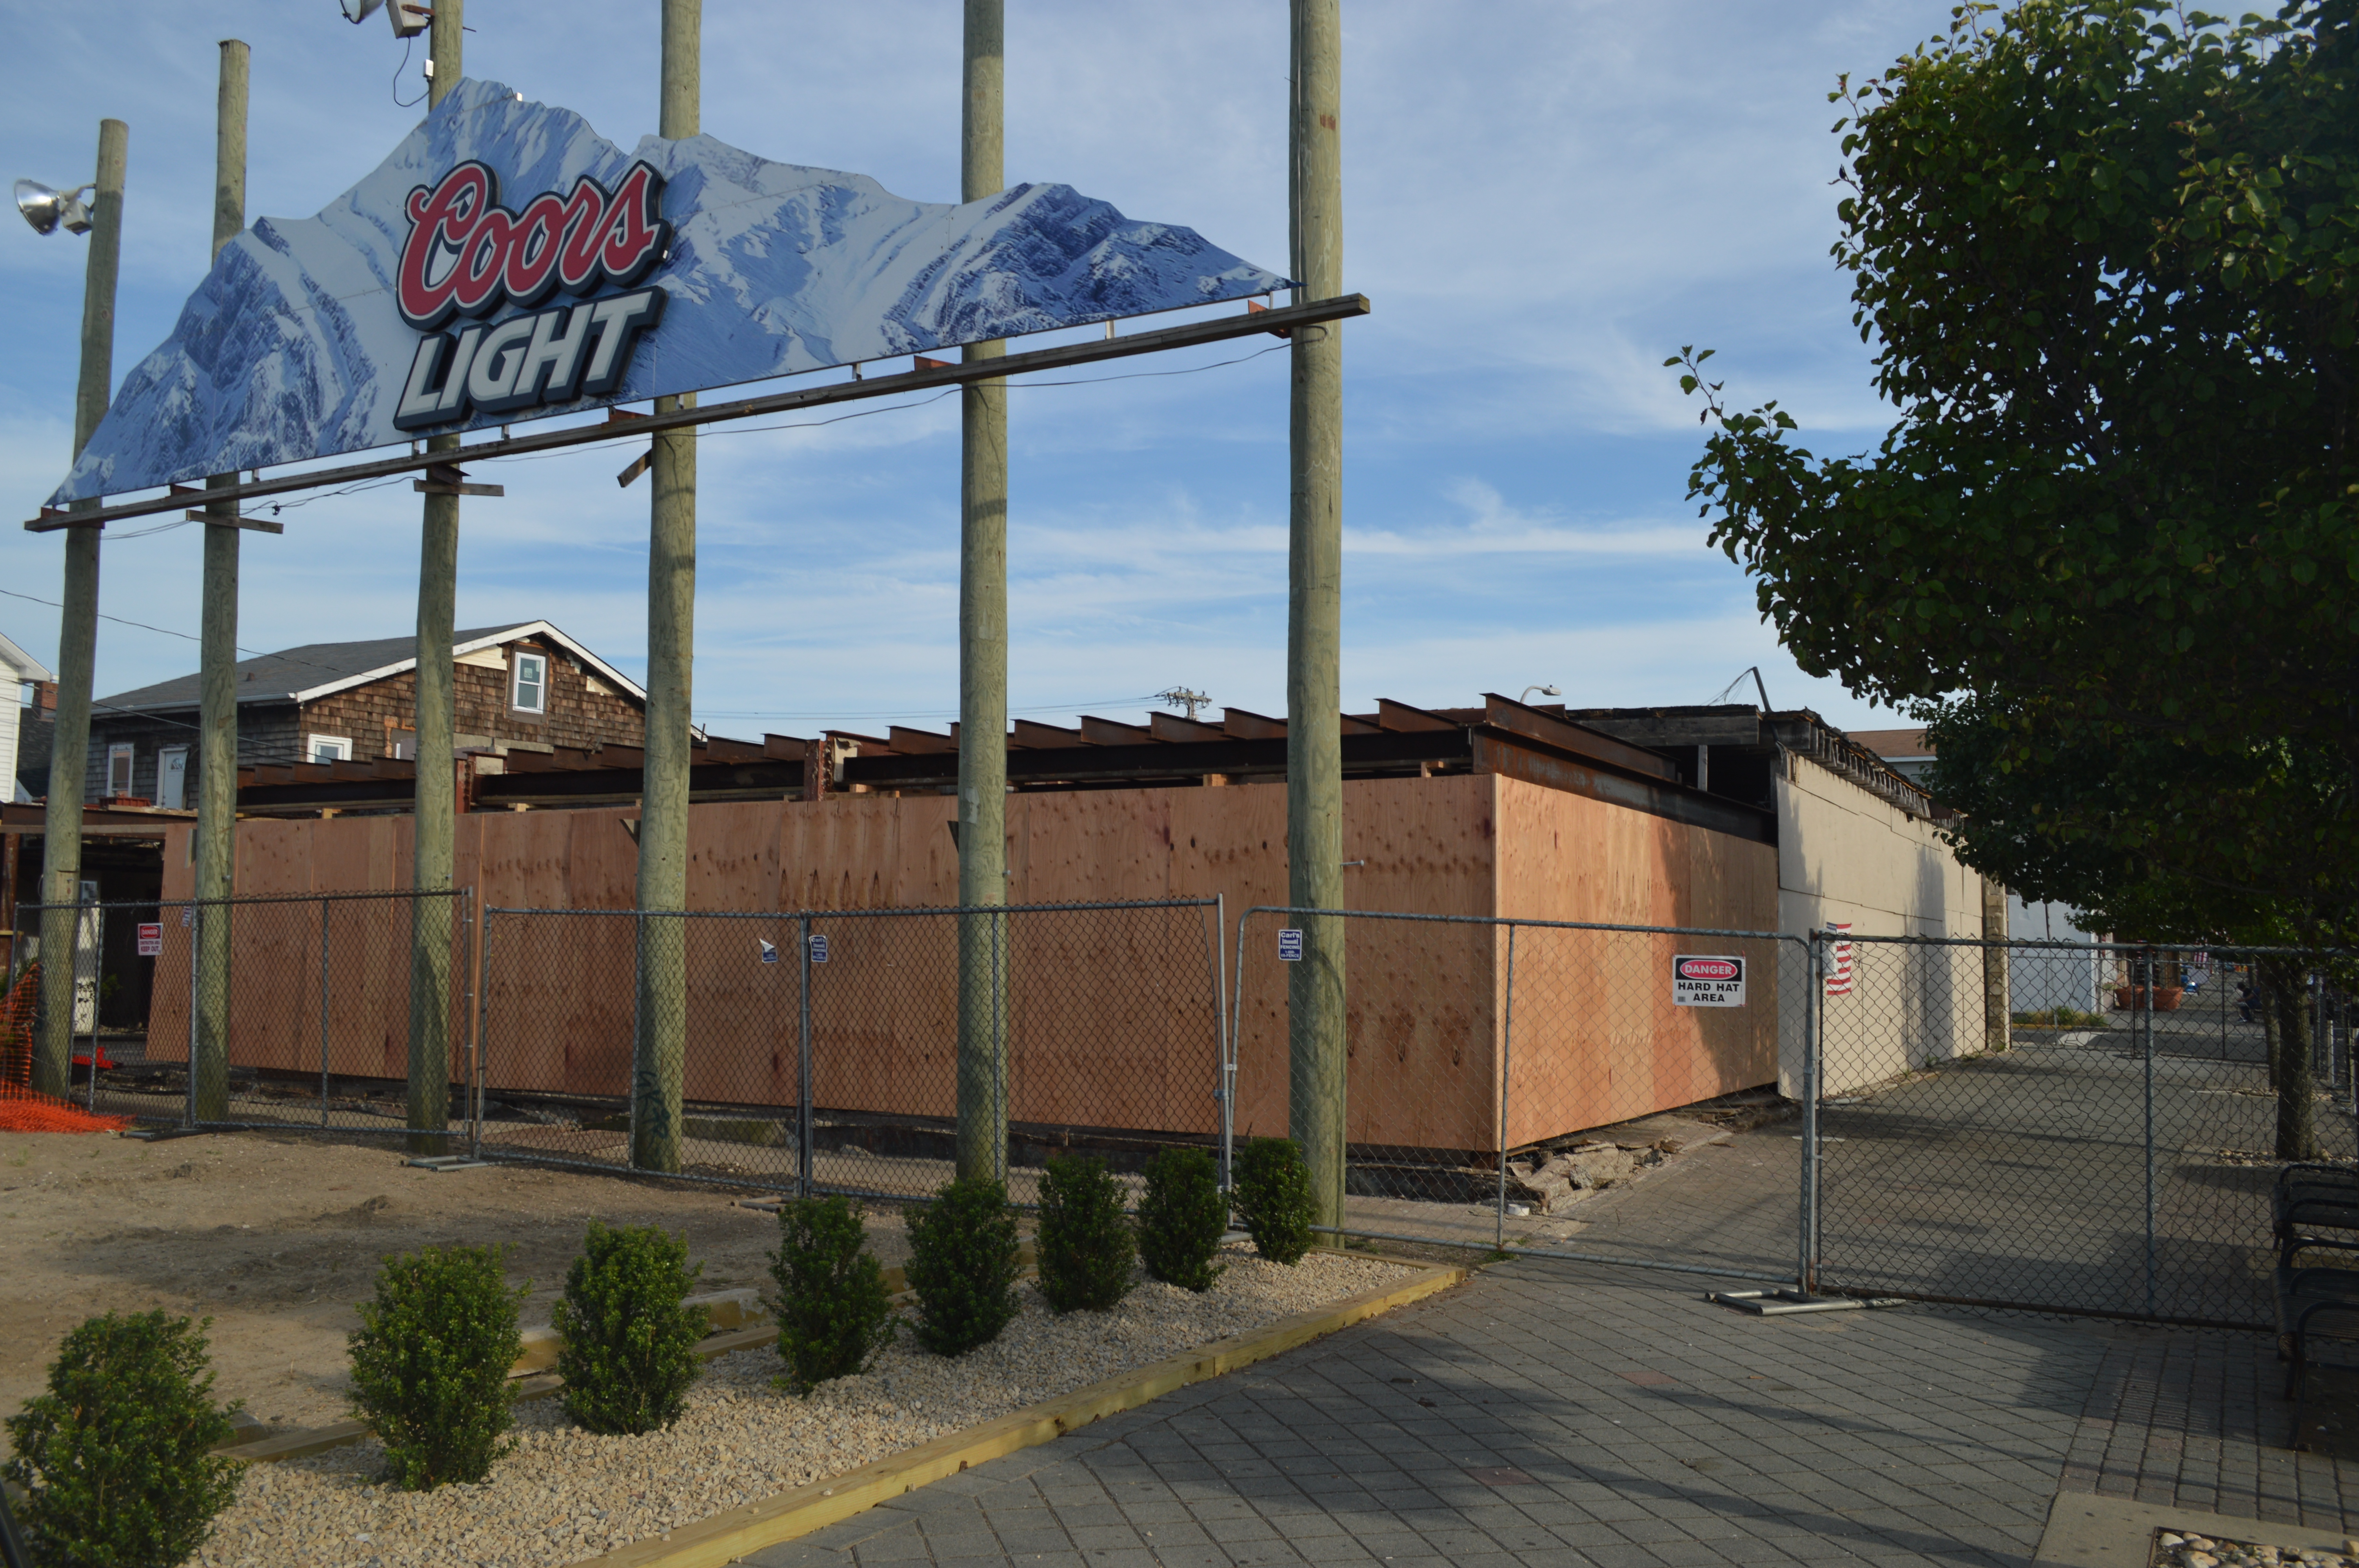 Construction at the former Merge nightclub in Seaside Heights, June 26, 2018. (Photo: Daniel Nee)